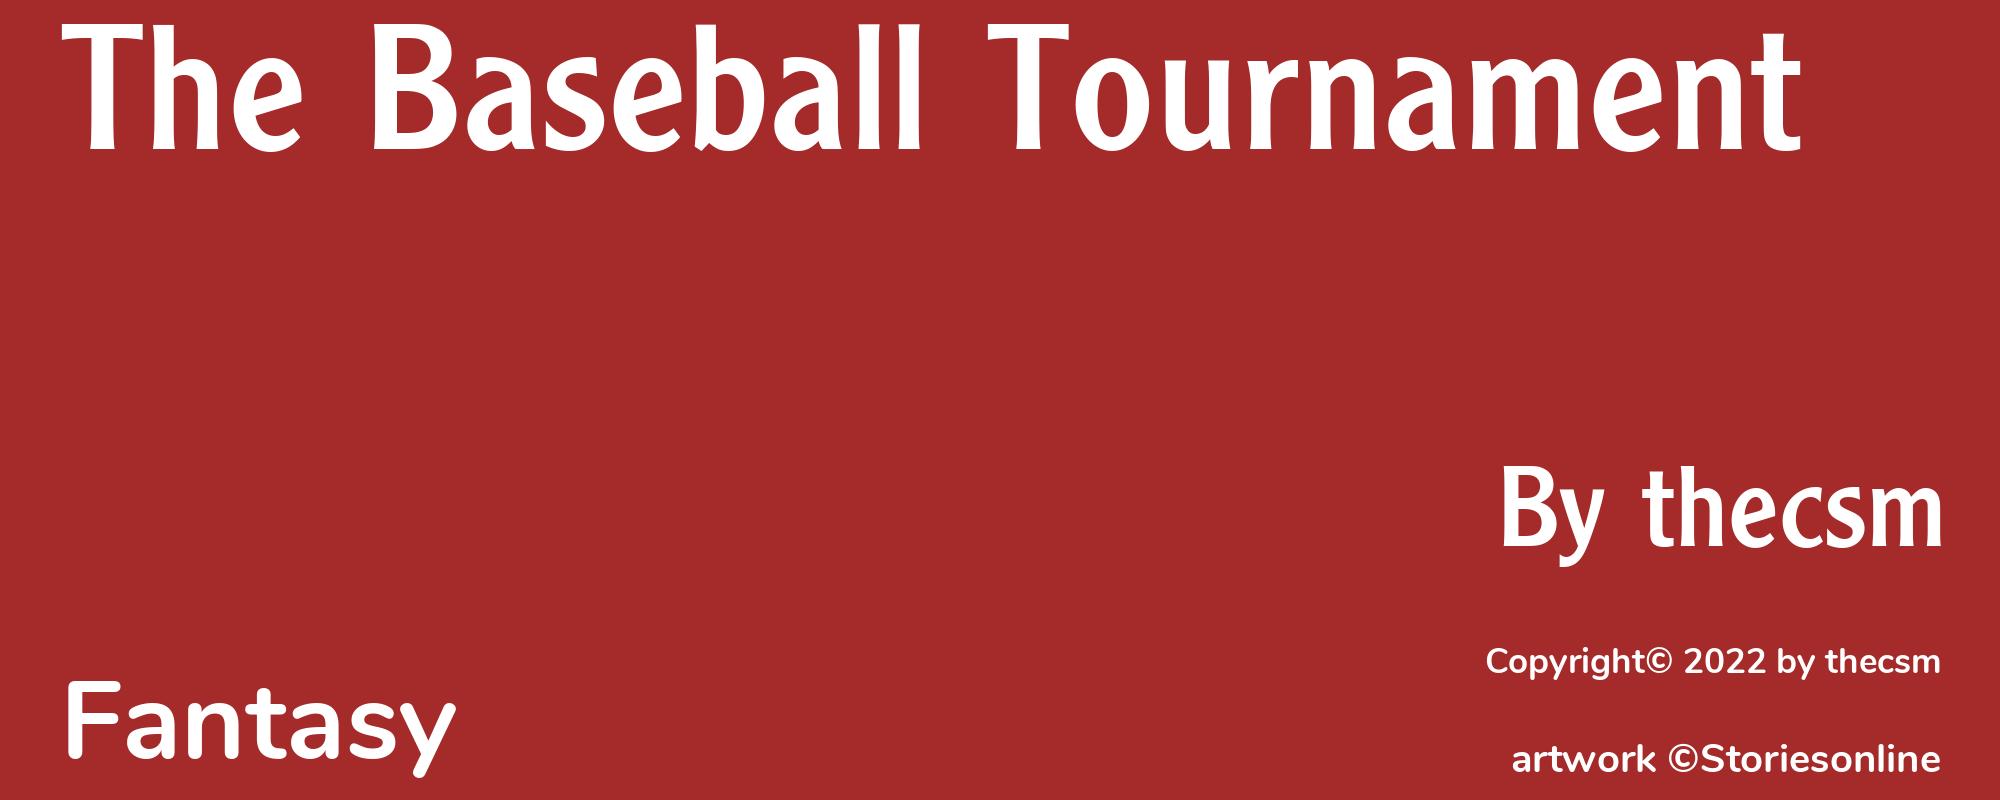 The Baseball Tournament - Cover